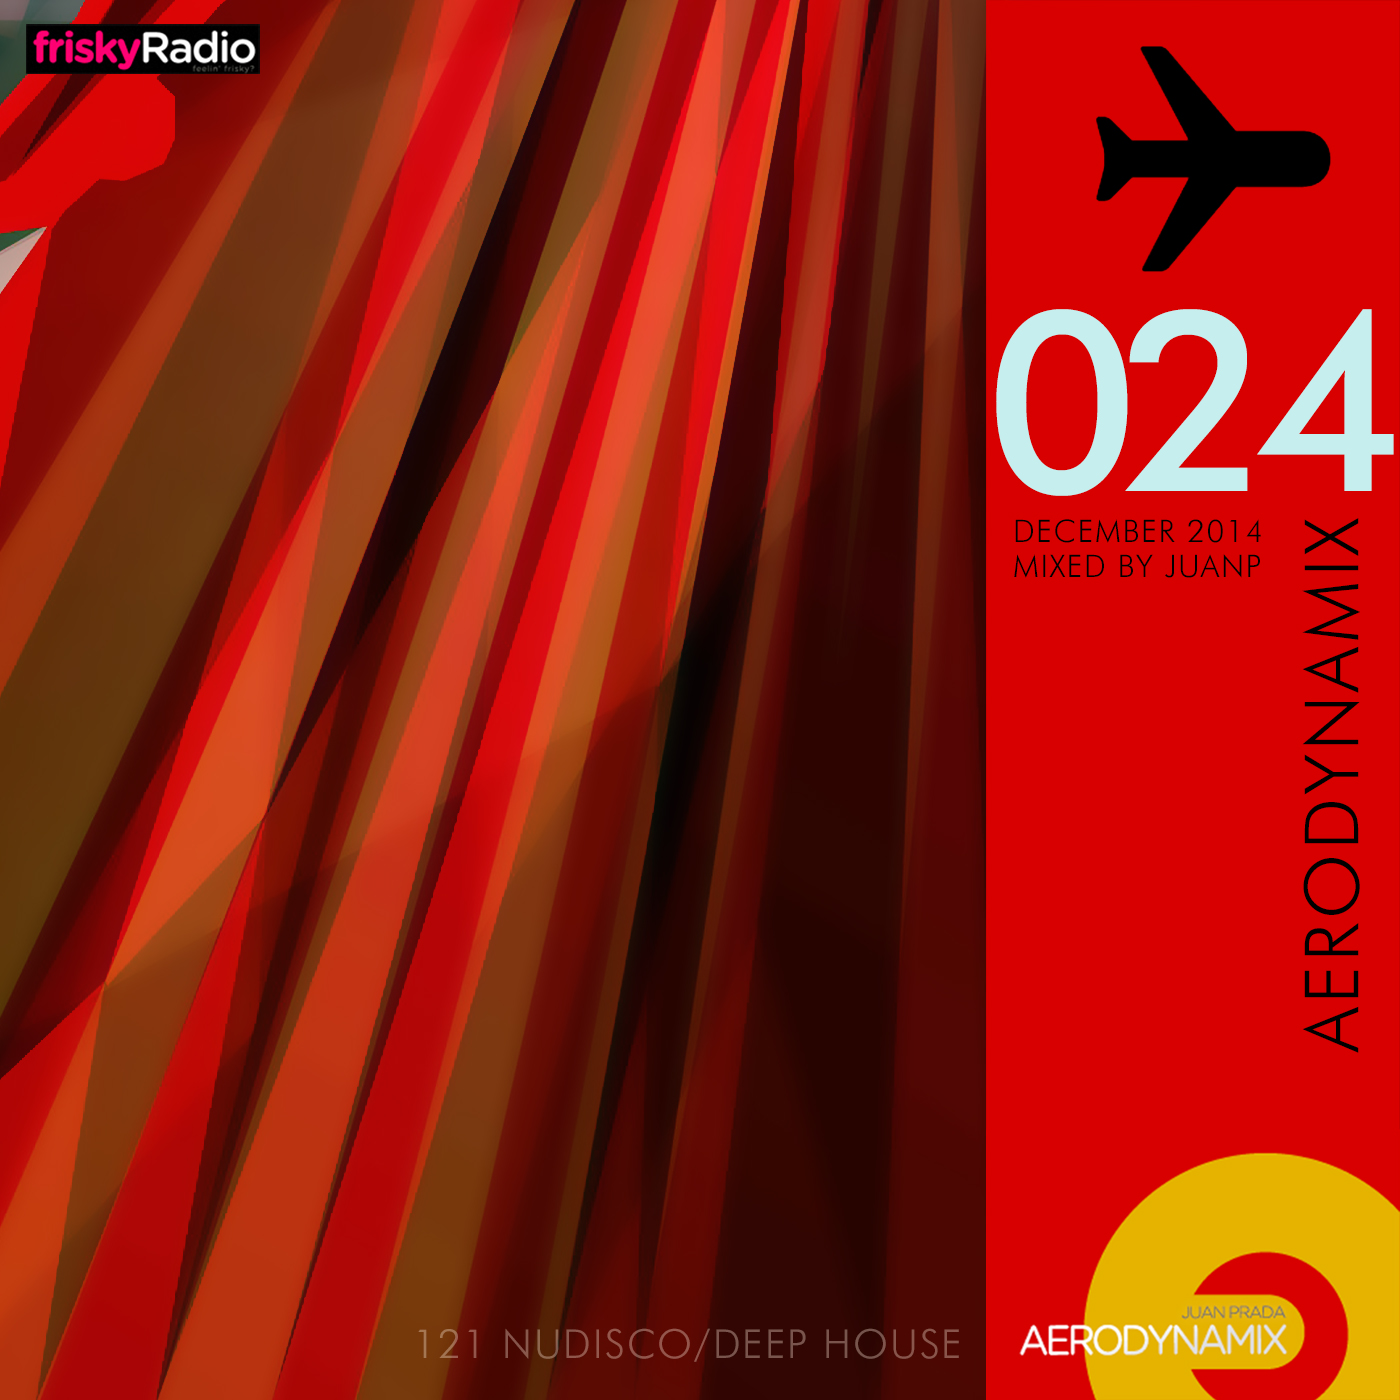 Aerodynamix 024 @ Frisky Radio December 2014 mixed by JuanP